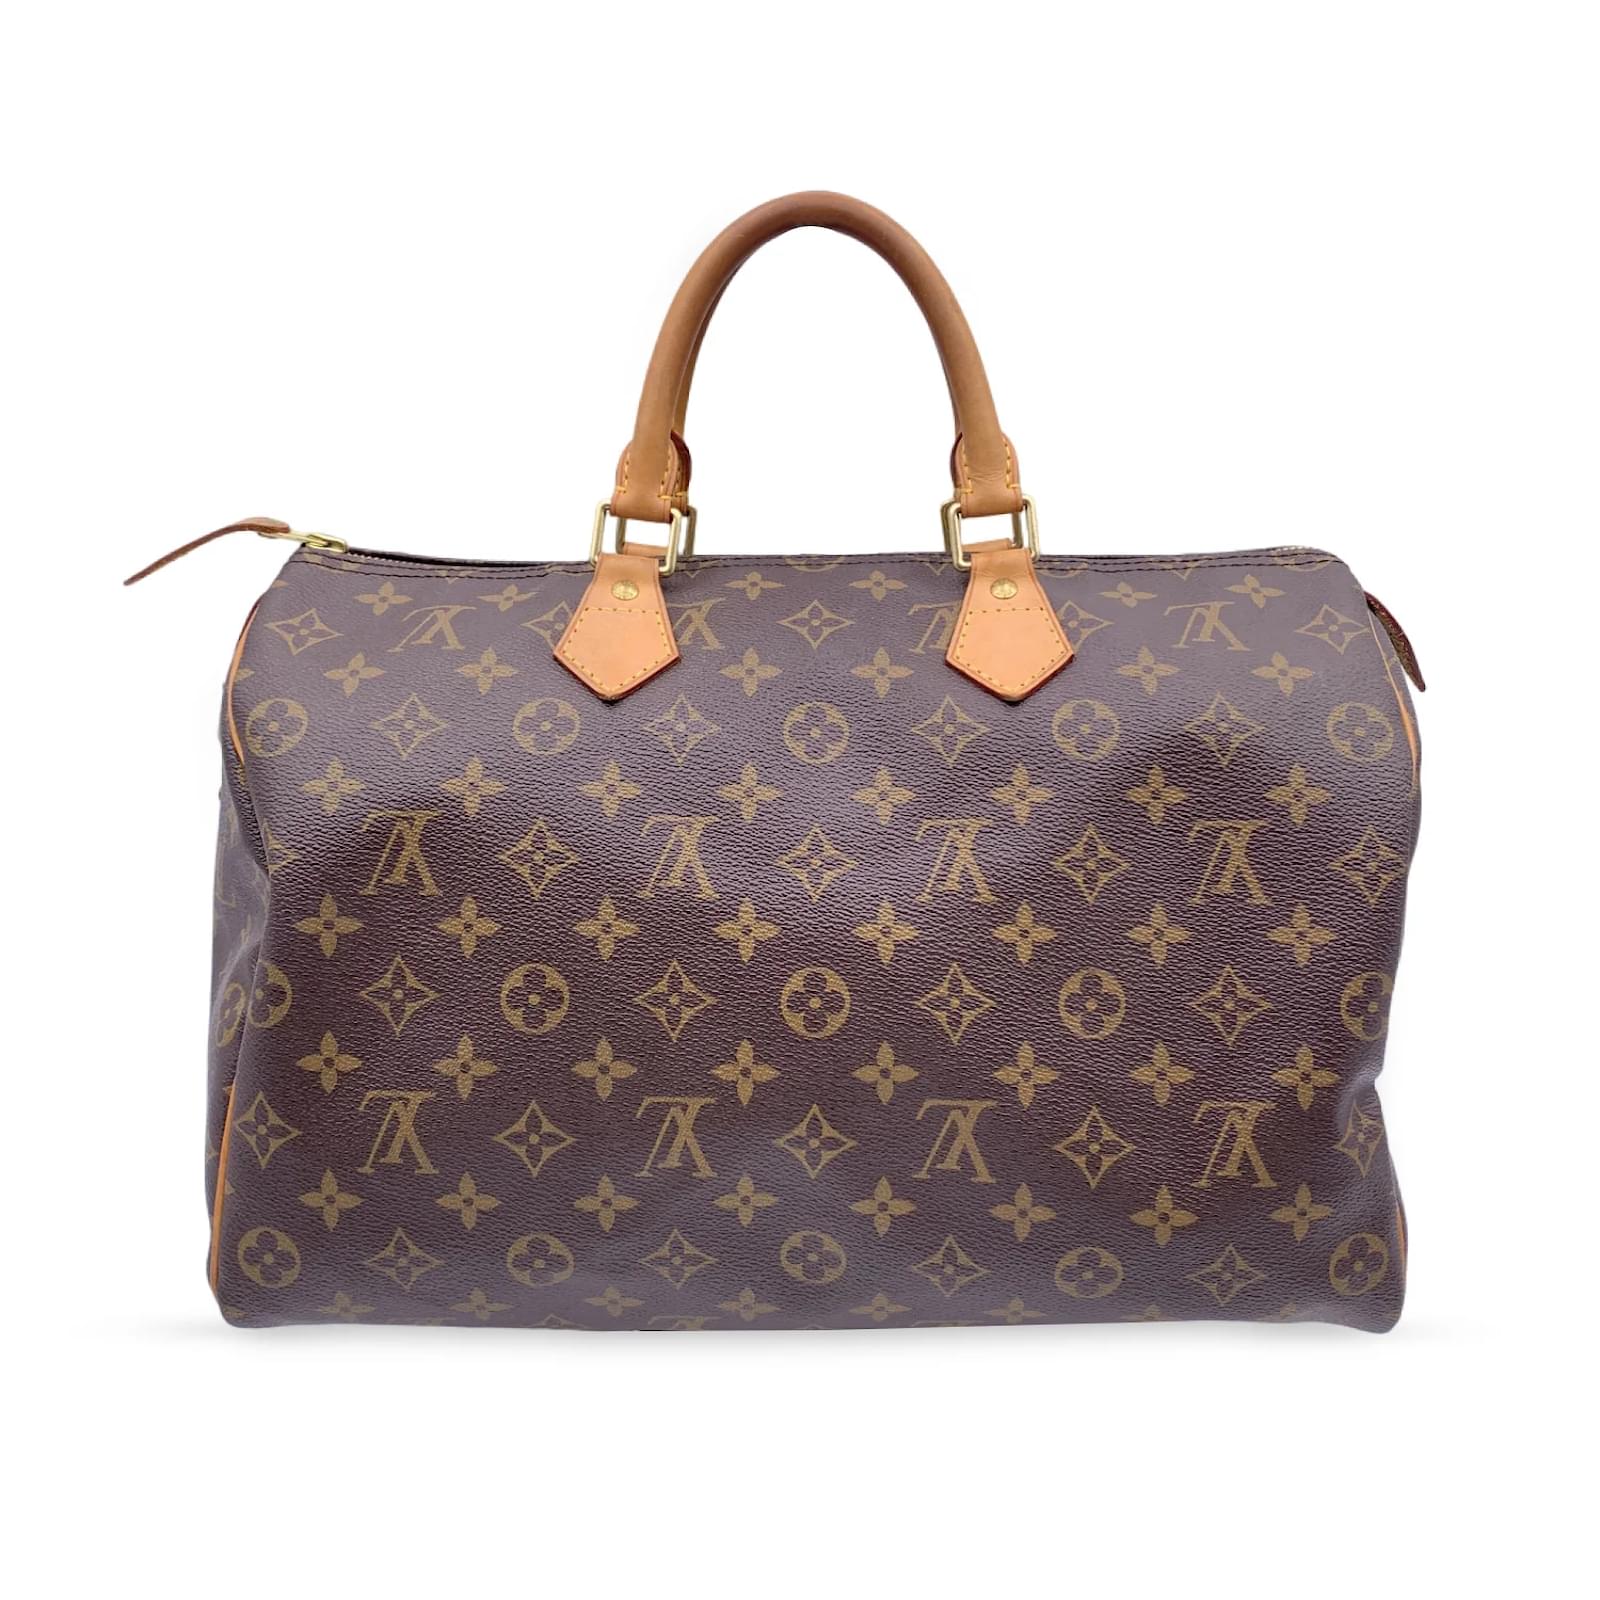 Used Louis Vuitton Monogram Speedy 35 M41524 Handbag 